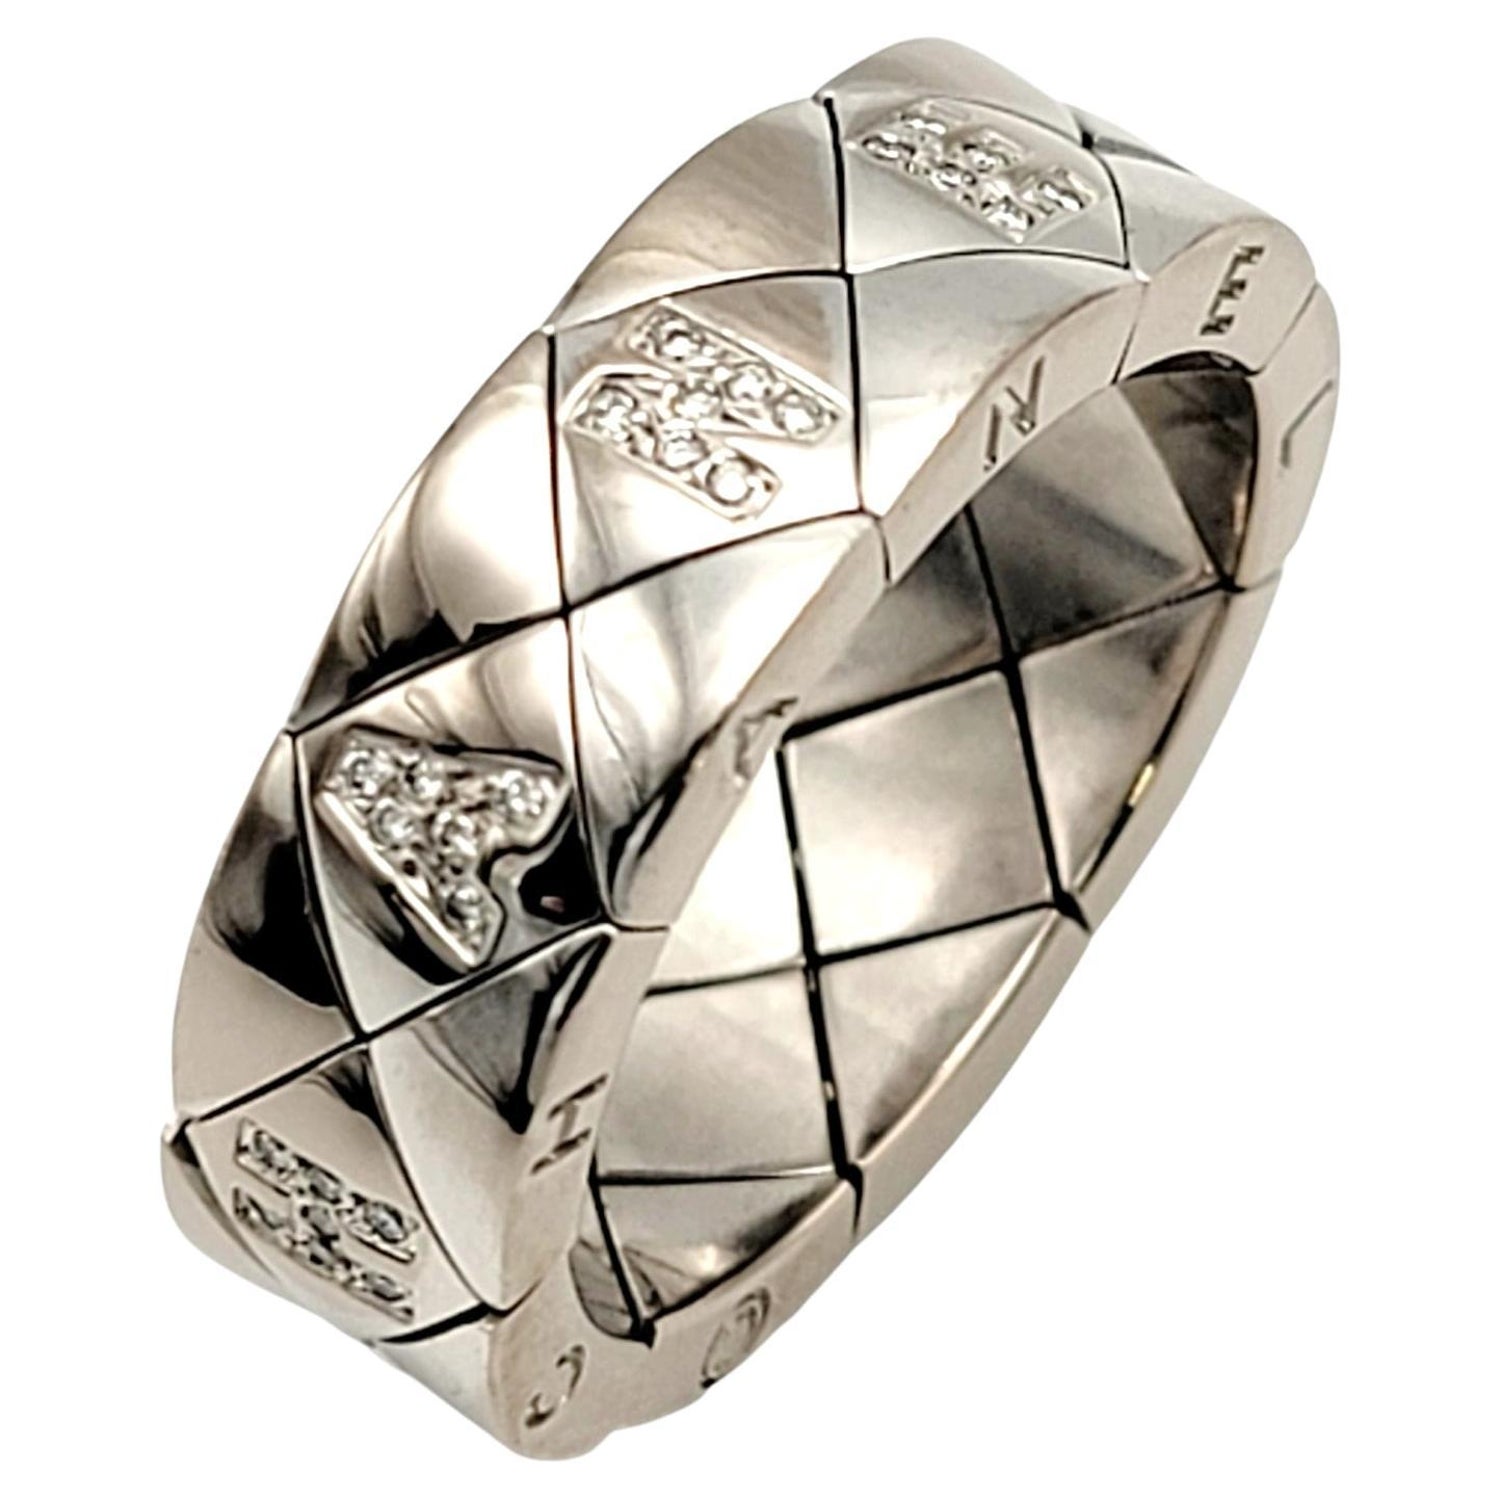 Chanel Coco Crush 18 Karat White Gold Band With Diamonds - Regent Jewelers